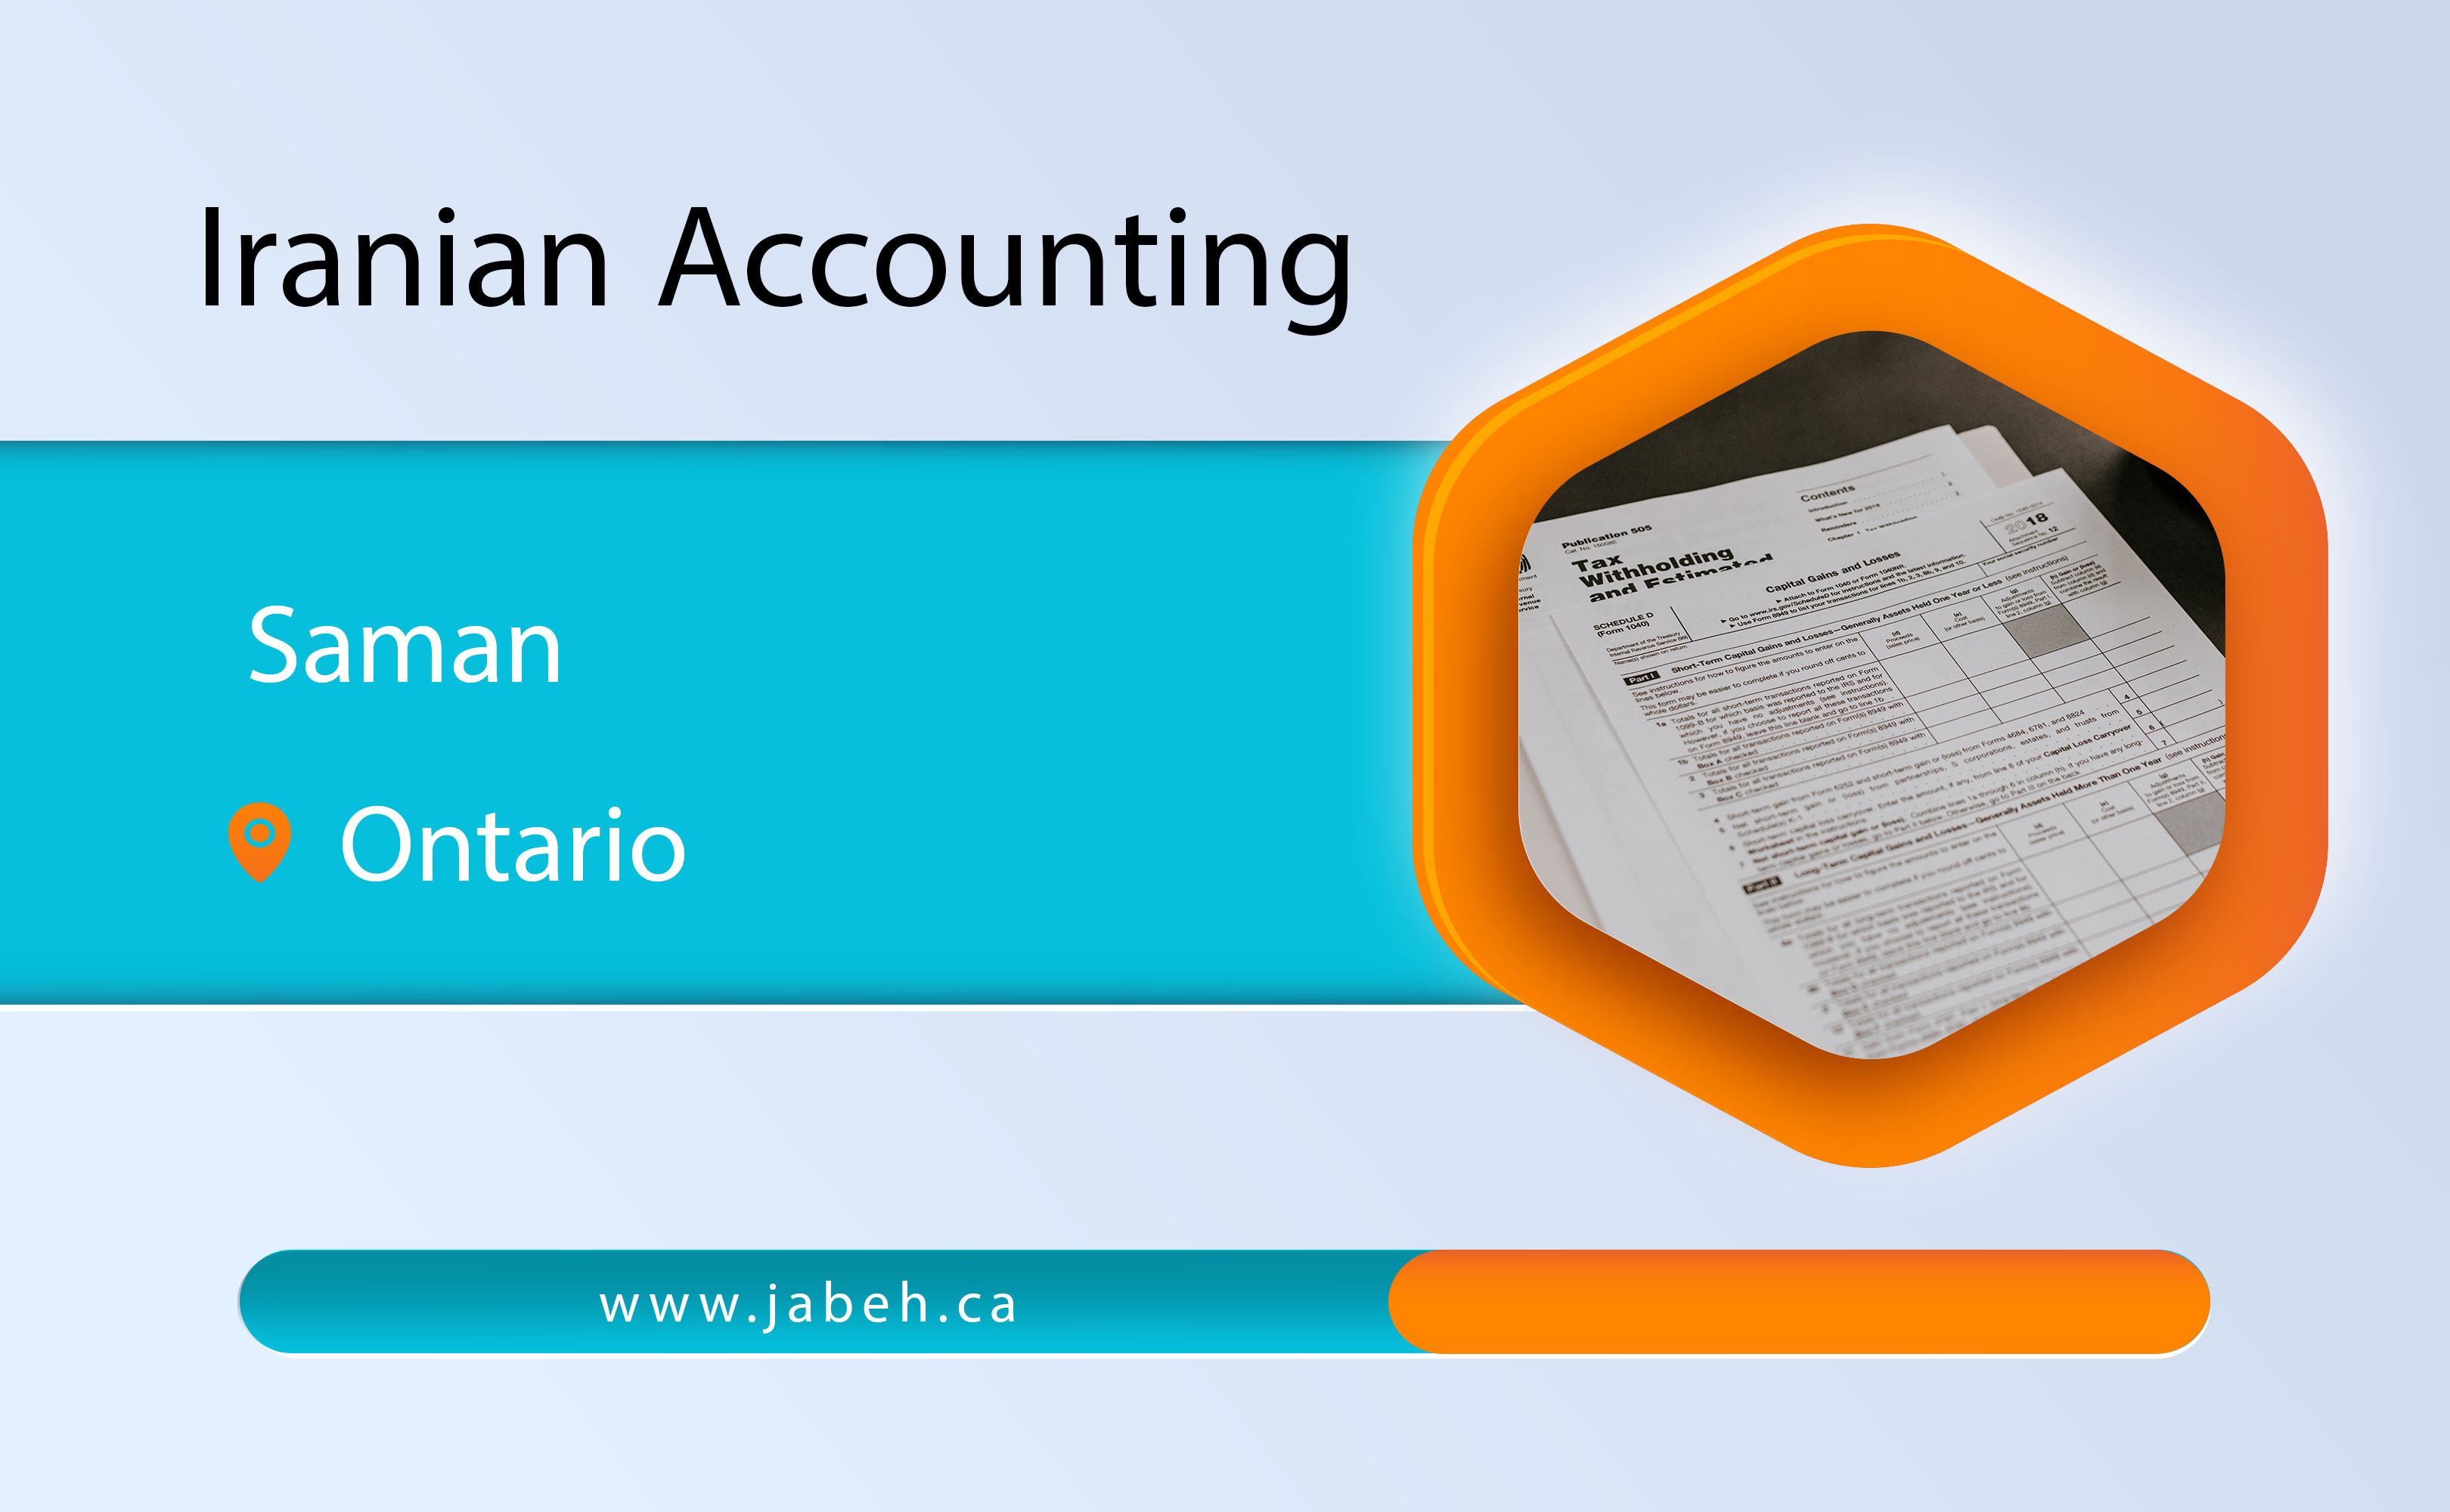 Iranian accounting company Saman in Ontario